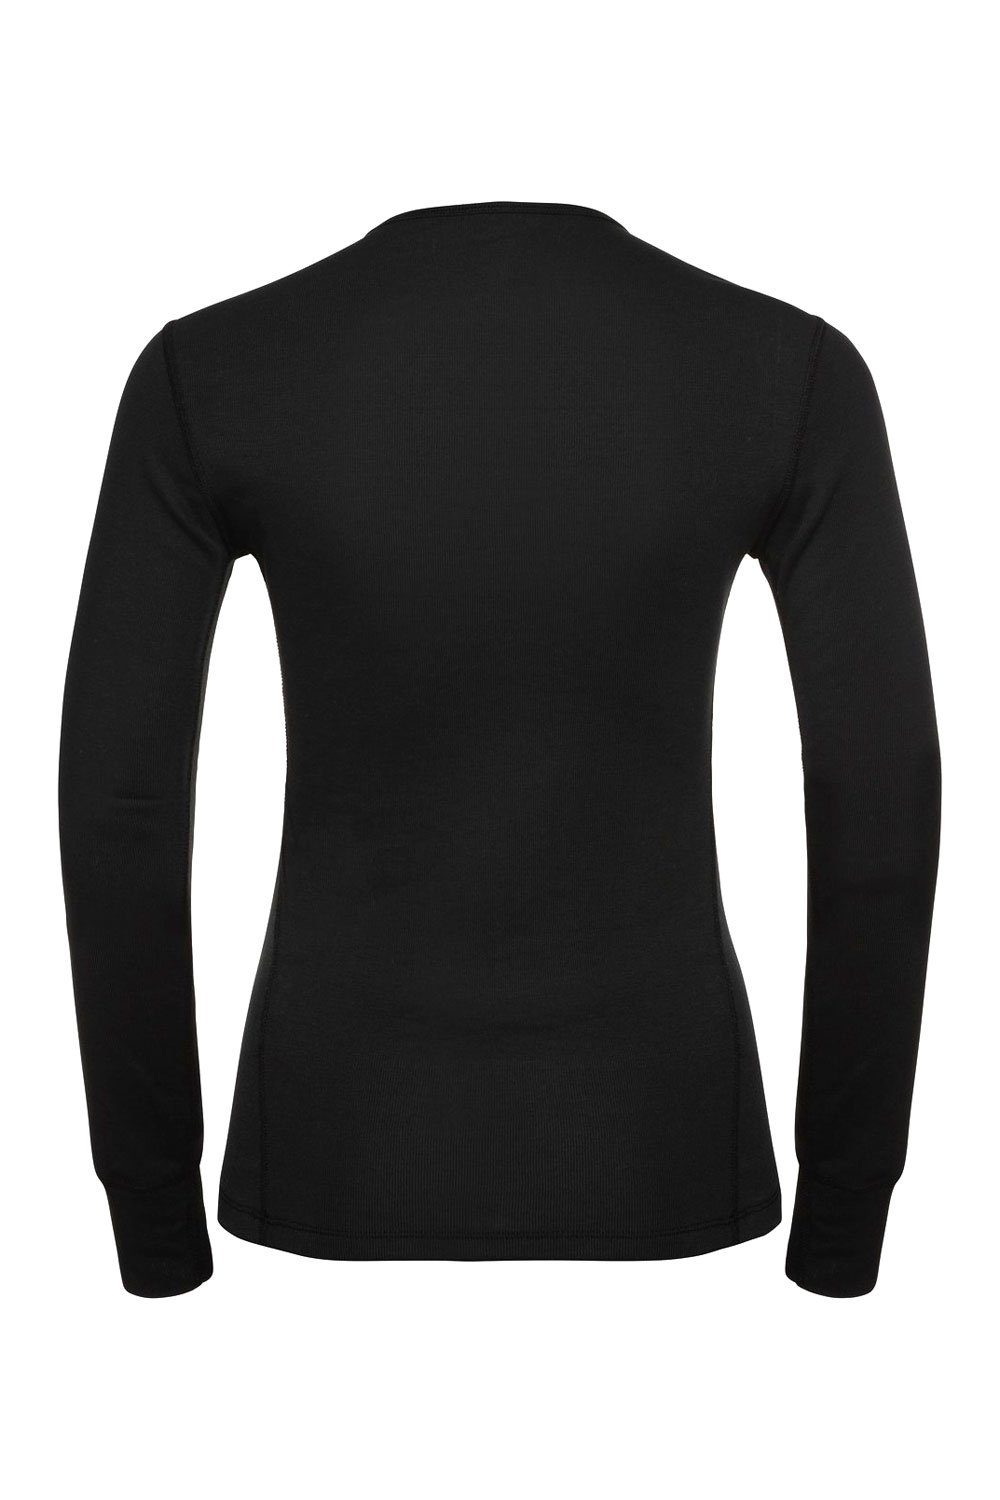 Odlo 159101 Funktionsshirt Shirt warm Eco black langarm,